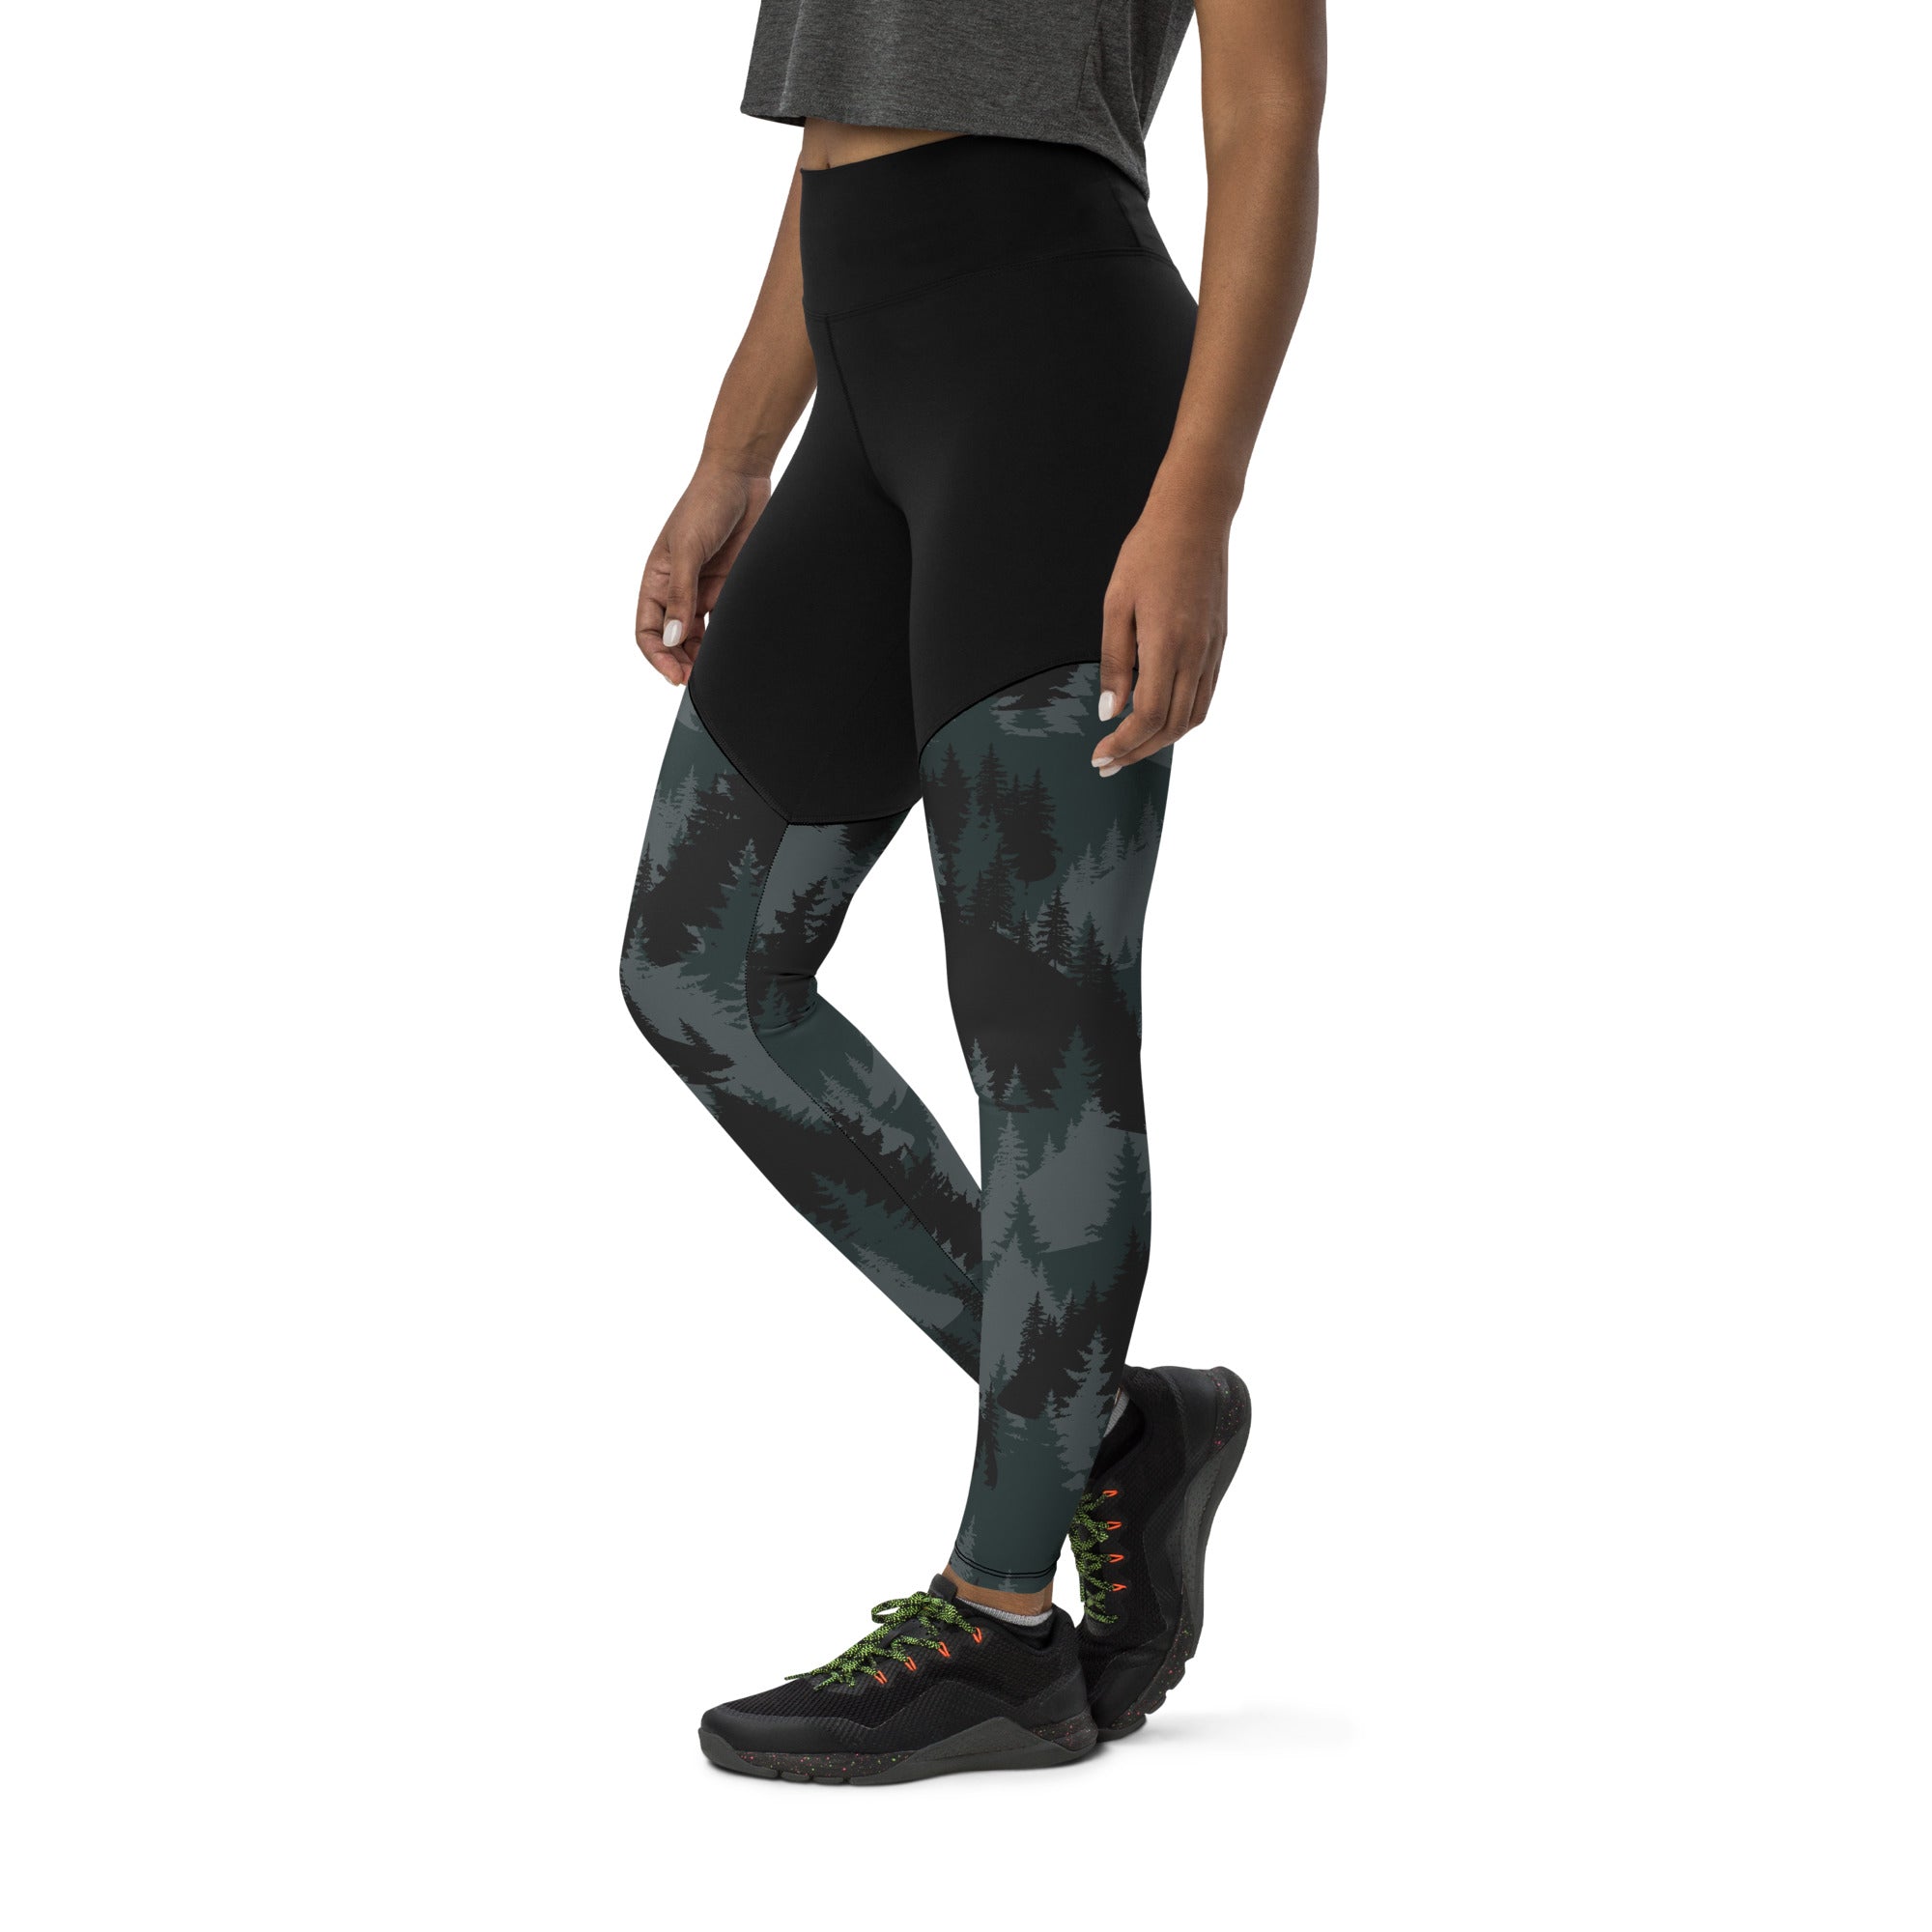 Luxtrada Women's High Waist Seamless Leggings Ankle Yoga Pants Squat Proof  Workout Tight - Walmart.com